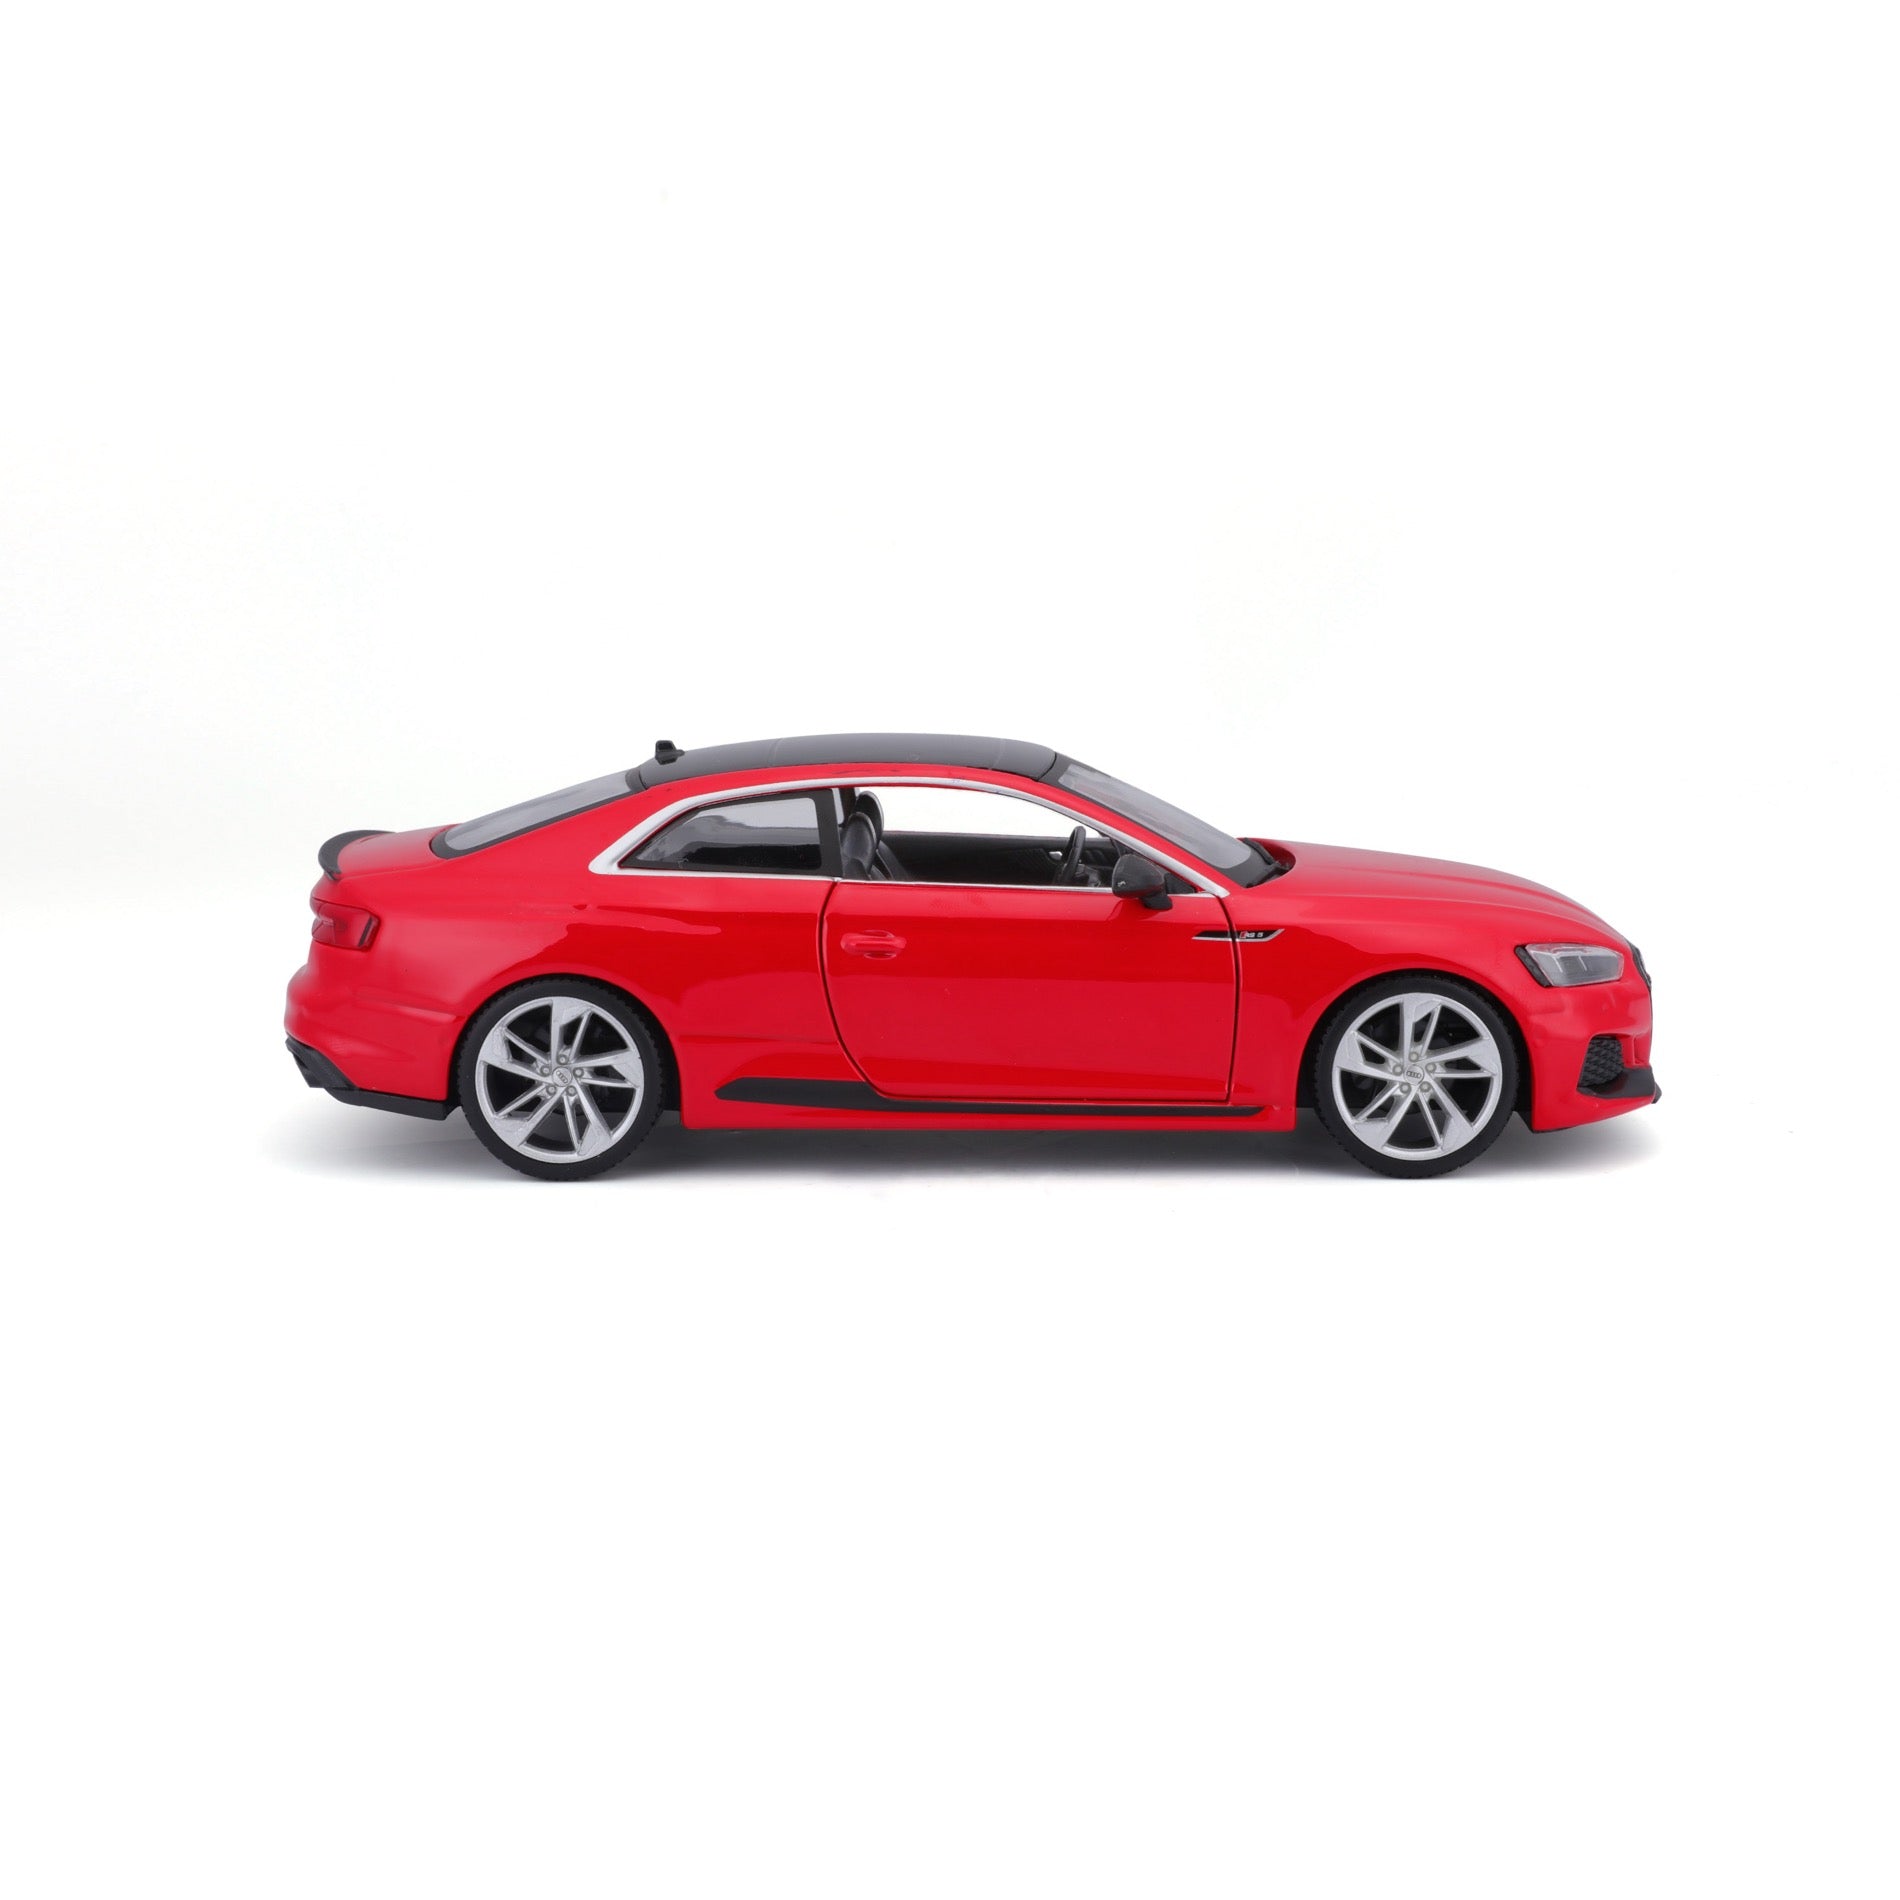 18-21090 RD - Bburago - 1:24 - Audi RS 5 Coupe (2019) - Rossa